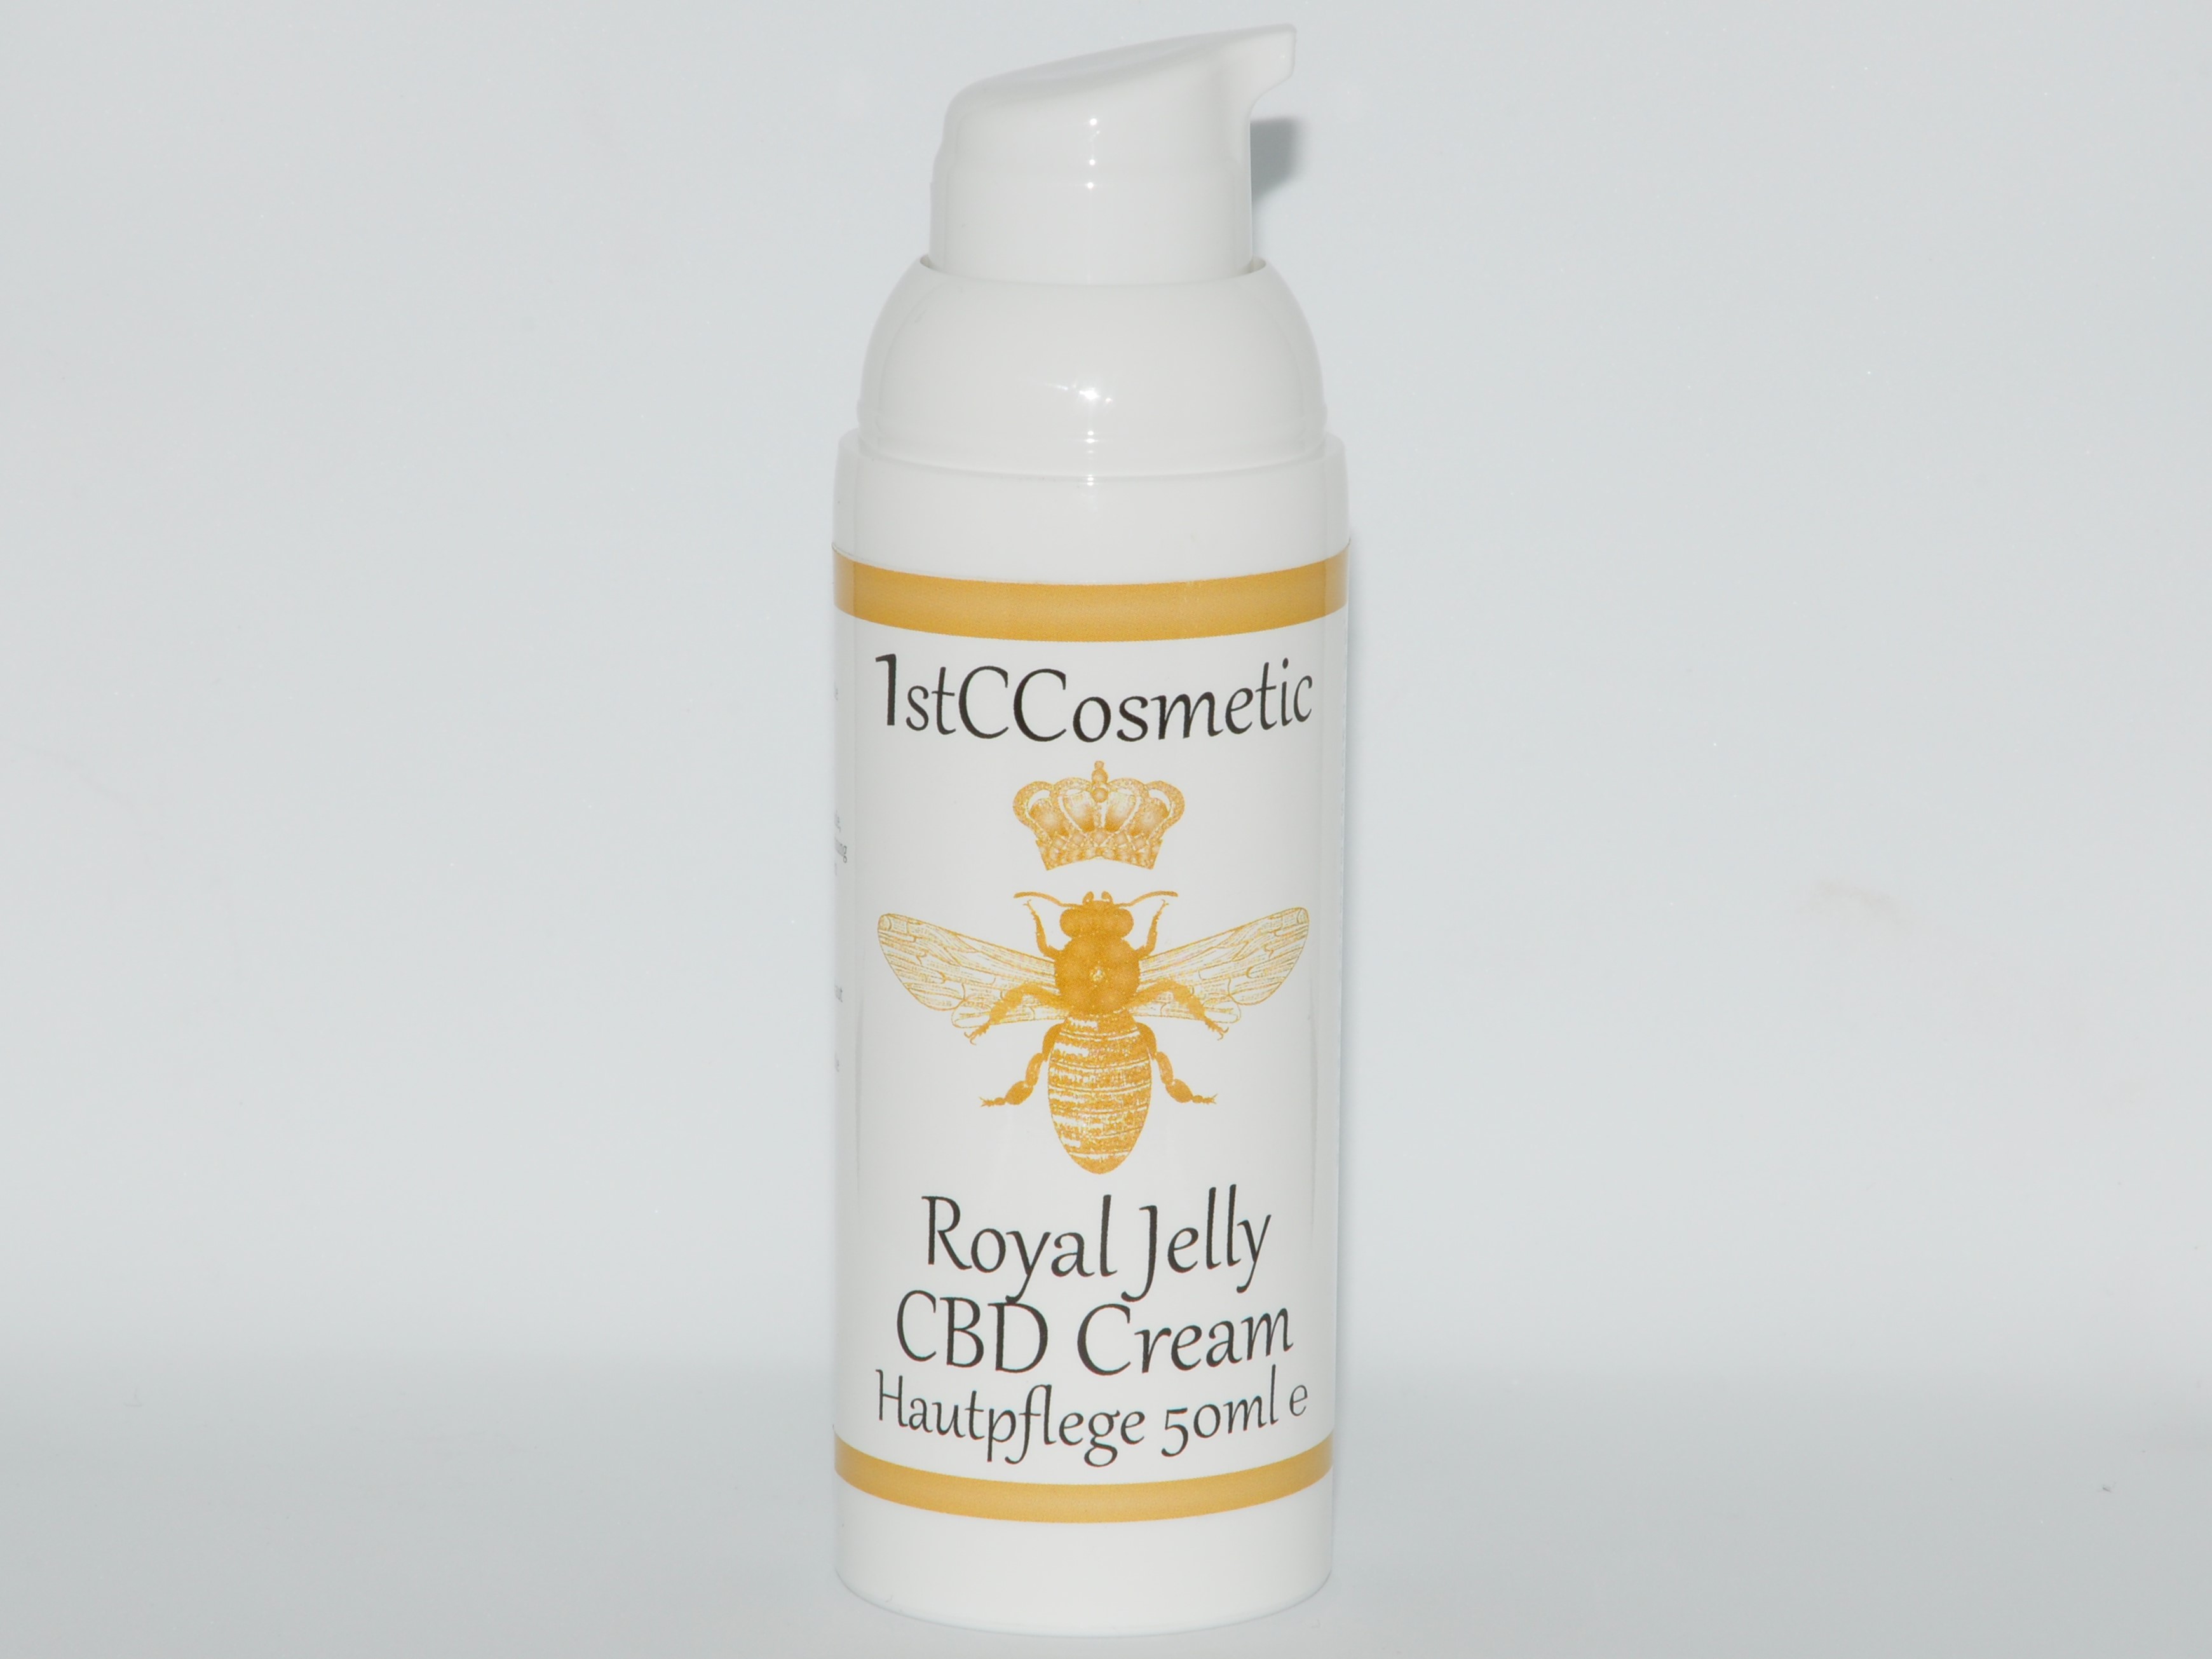 1stCCosmetic Royal Jelly CBD Cream